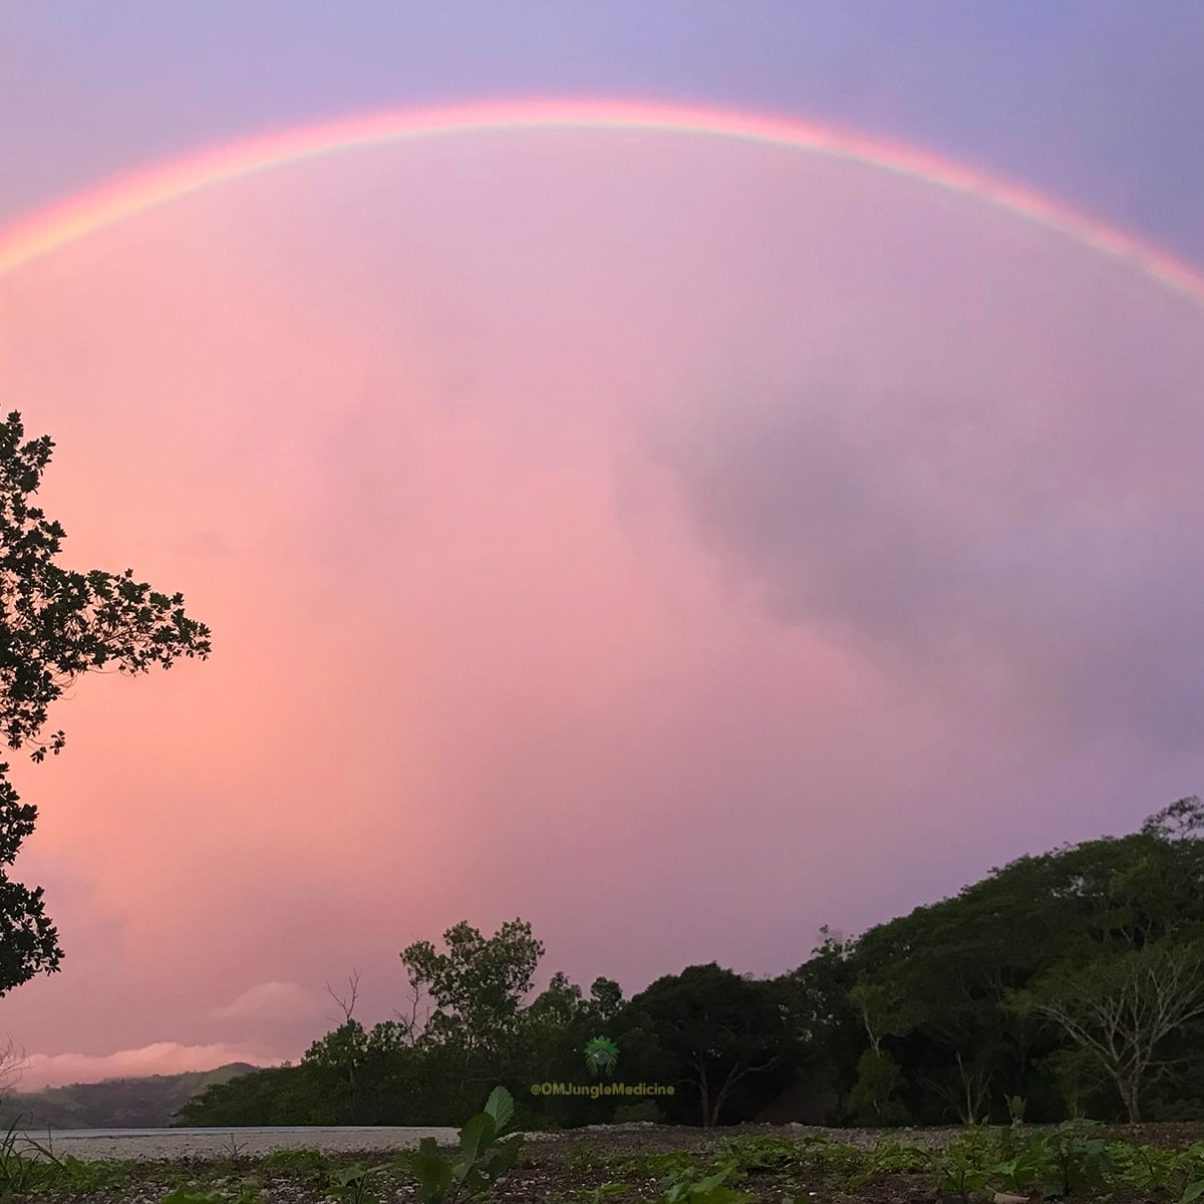 A rainbow at OM Jungle Medicine